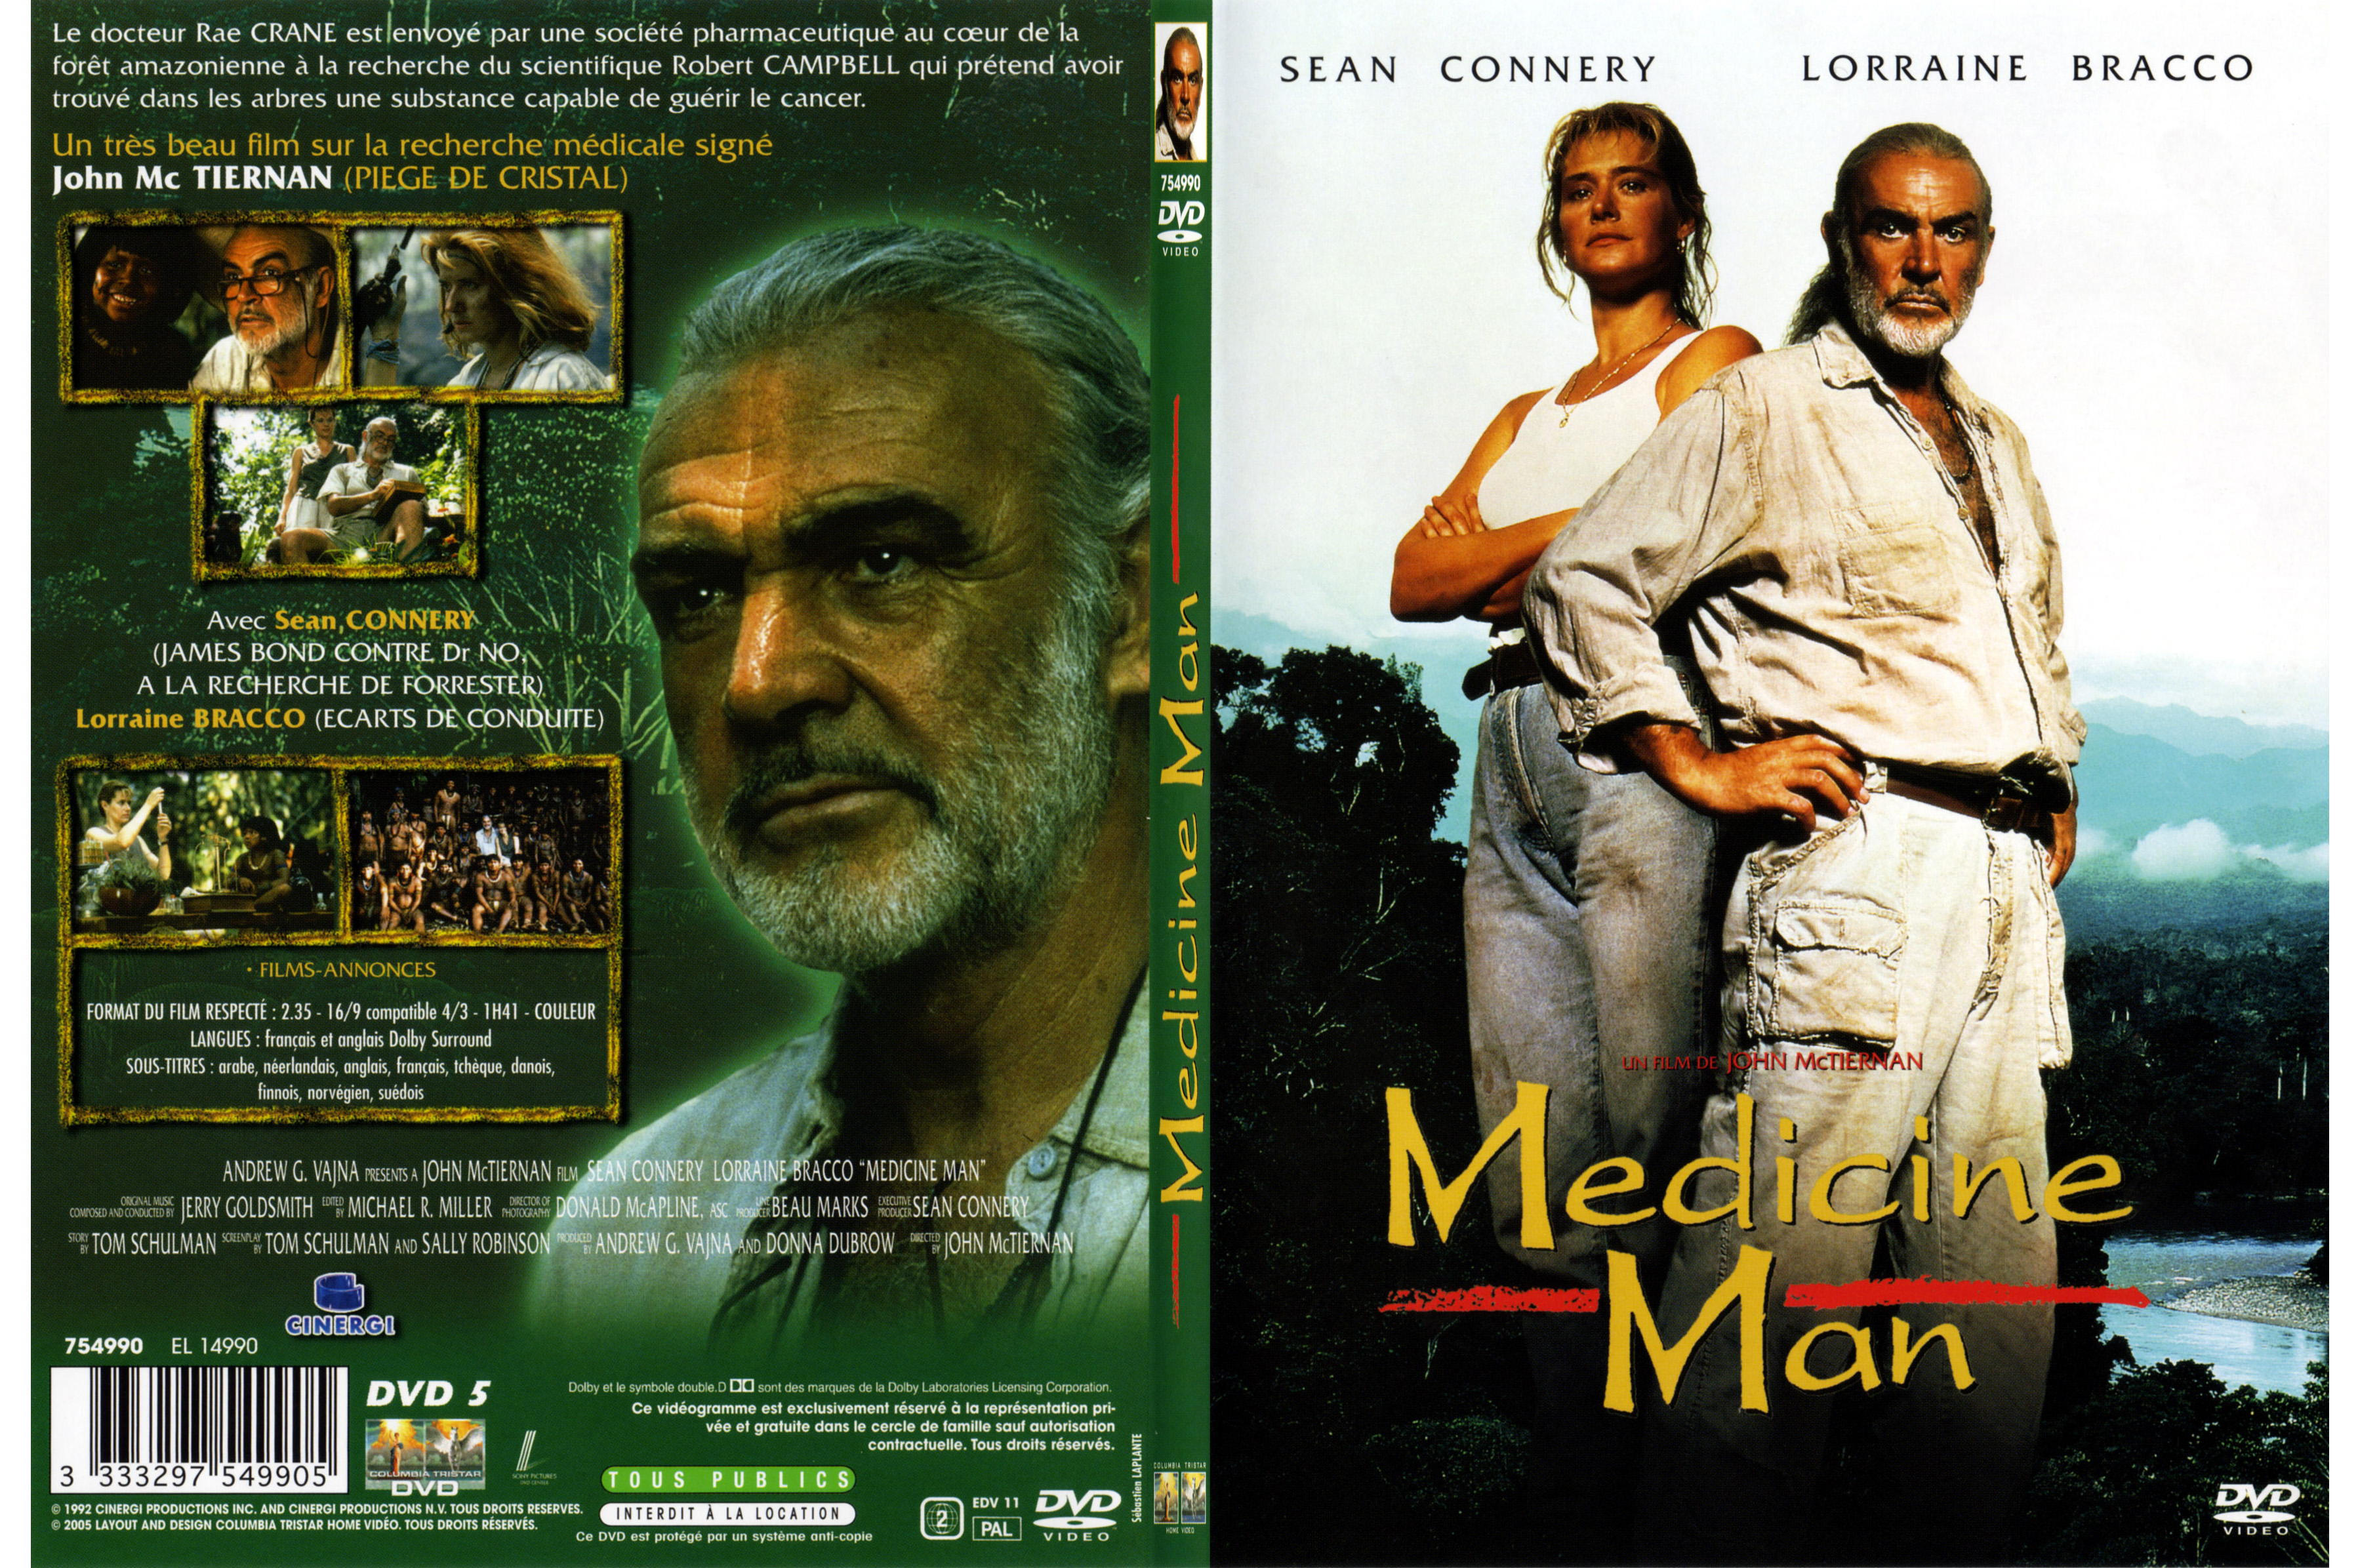 Jaquette DVD Medicine man - SLIM